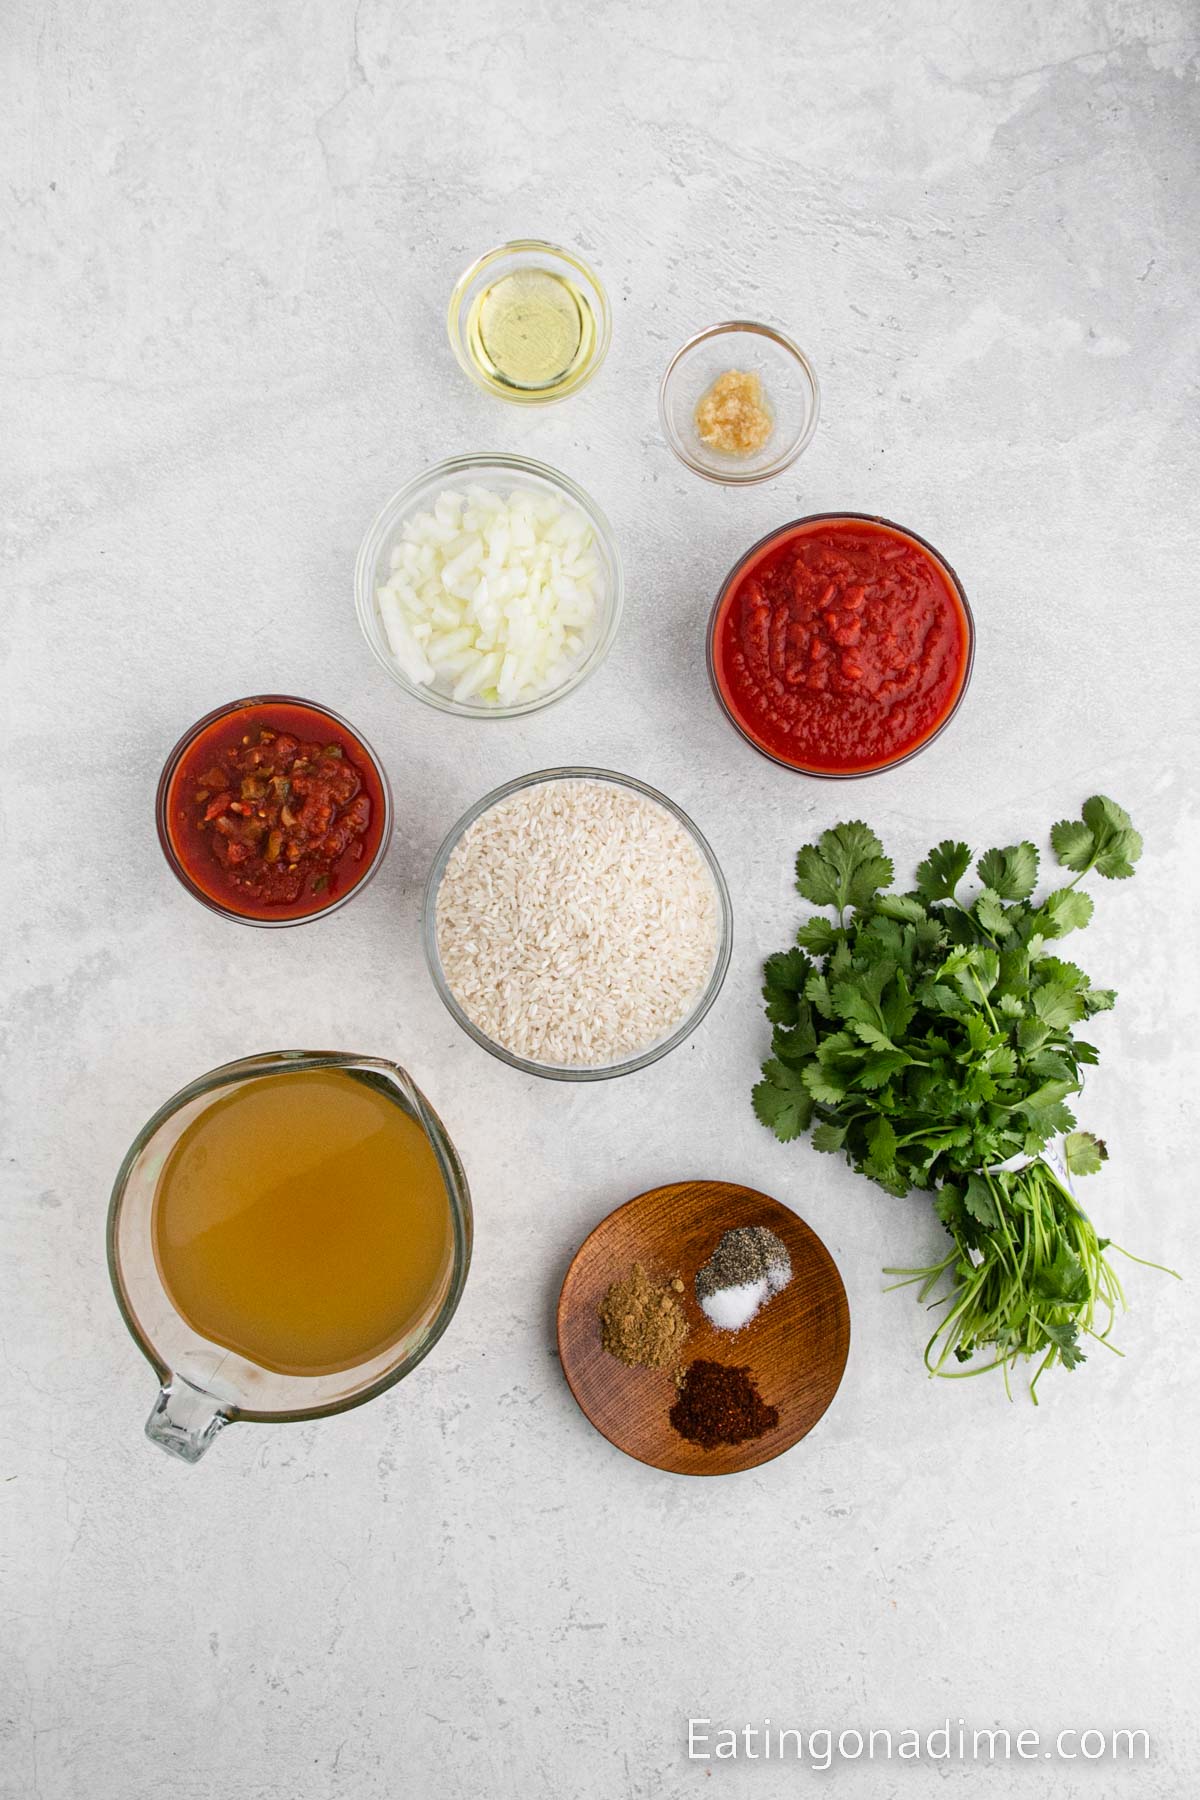 Ingredients for Spanish Rice - White Rice, onion, oil, chicken broth, tomato sauce, salsa, garlic, cumin, chili powder, salt, pepper, cilantro